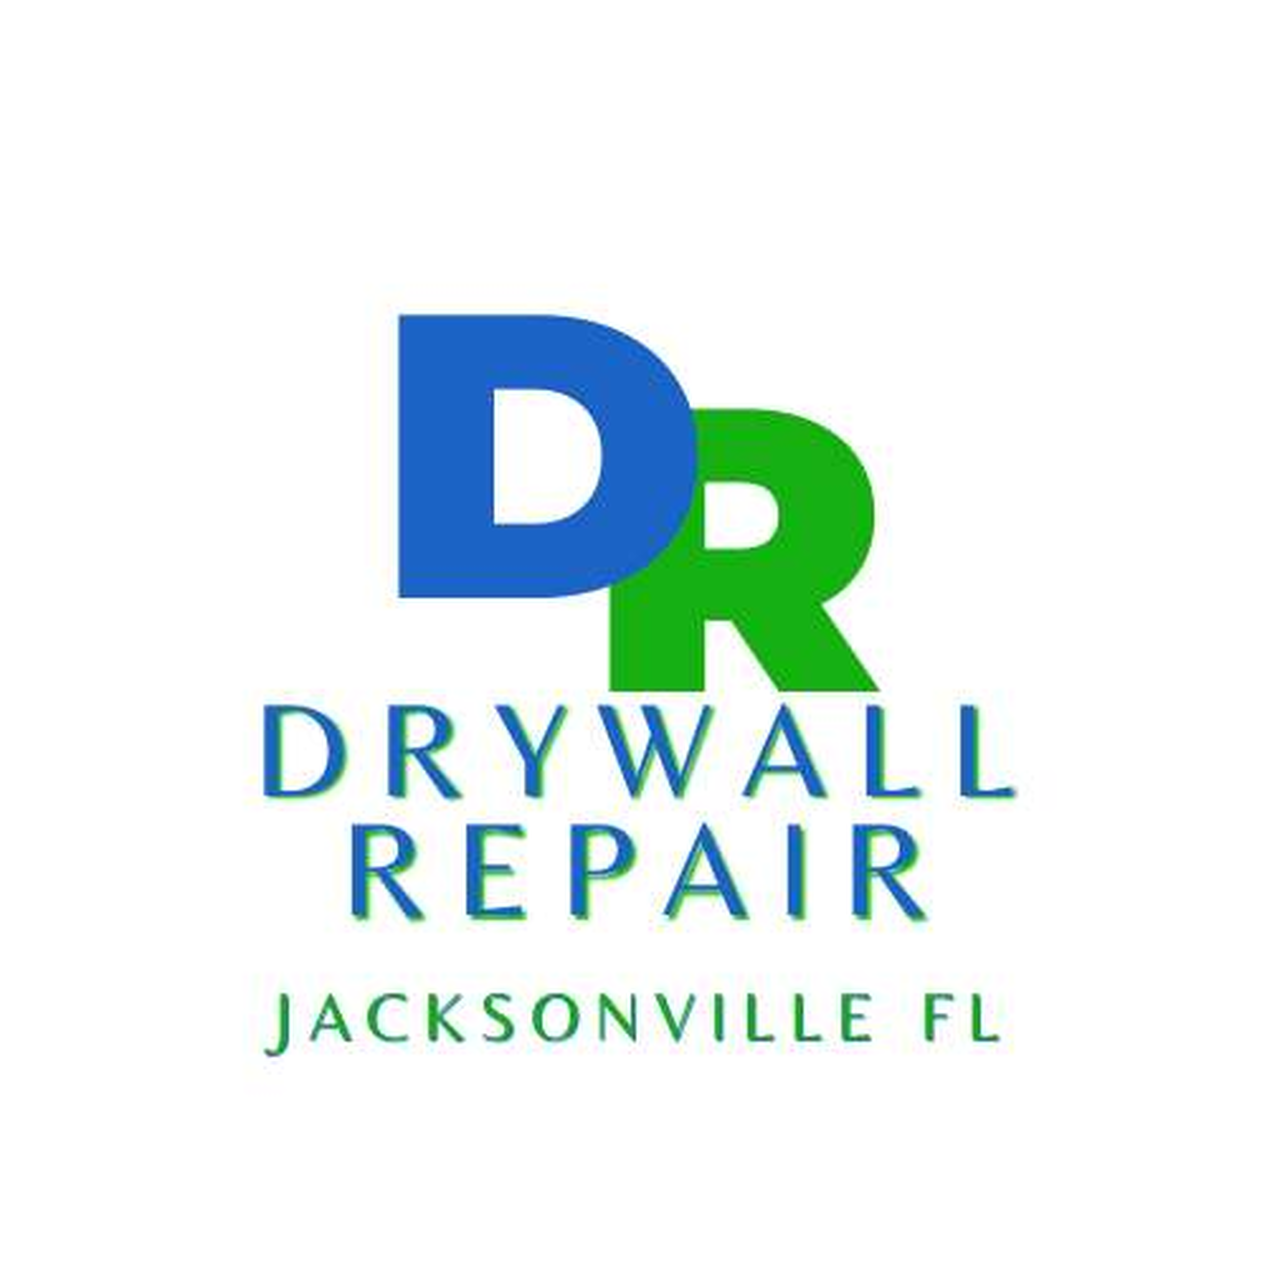 DRYWALL REPAIR - JACKSONVILLE FL